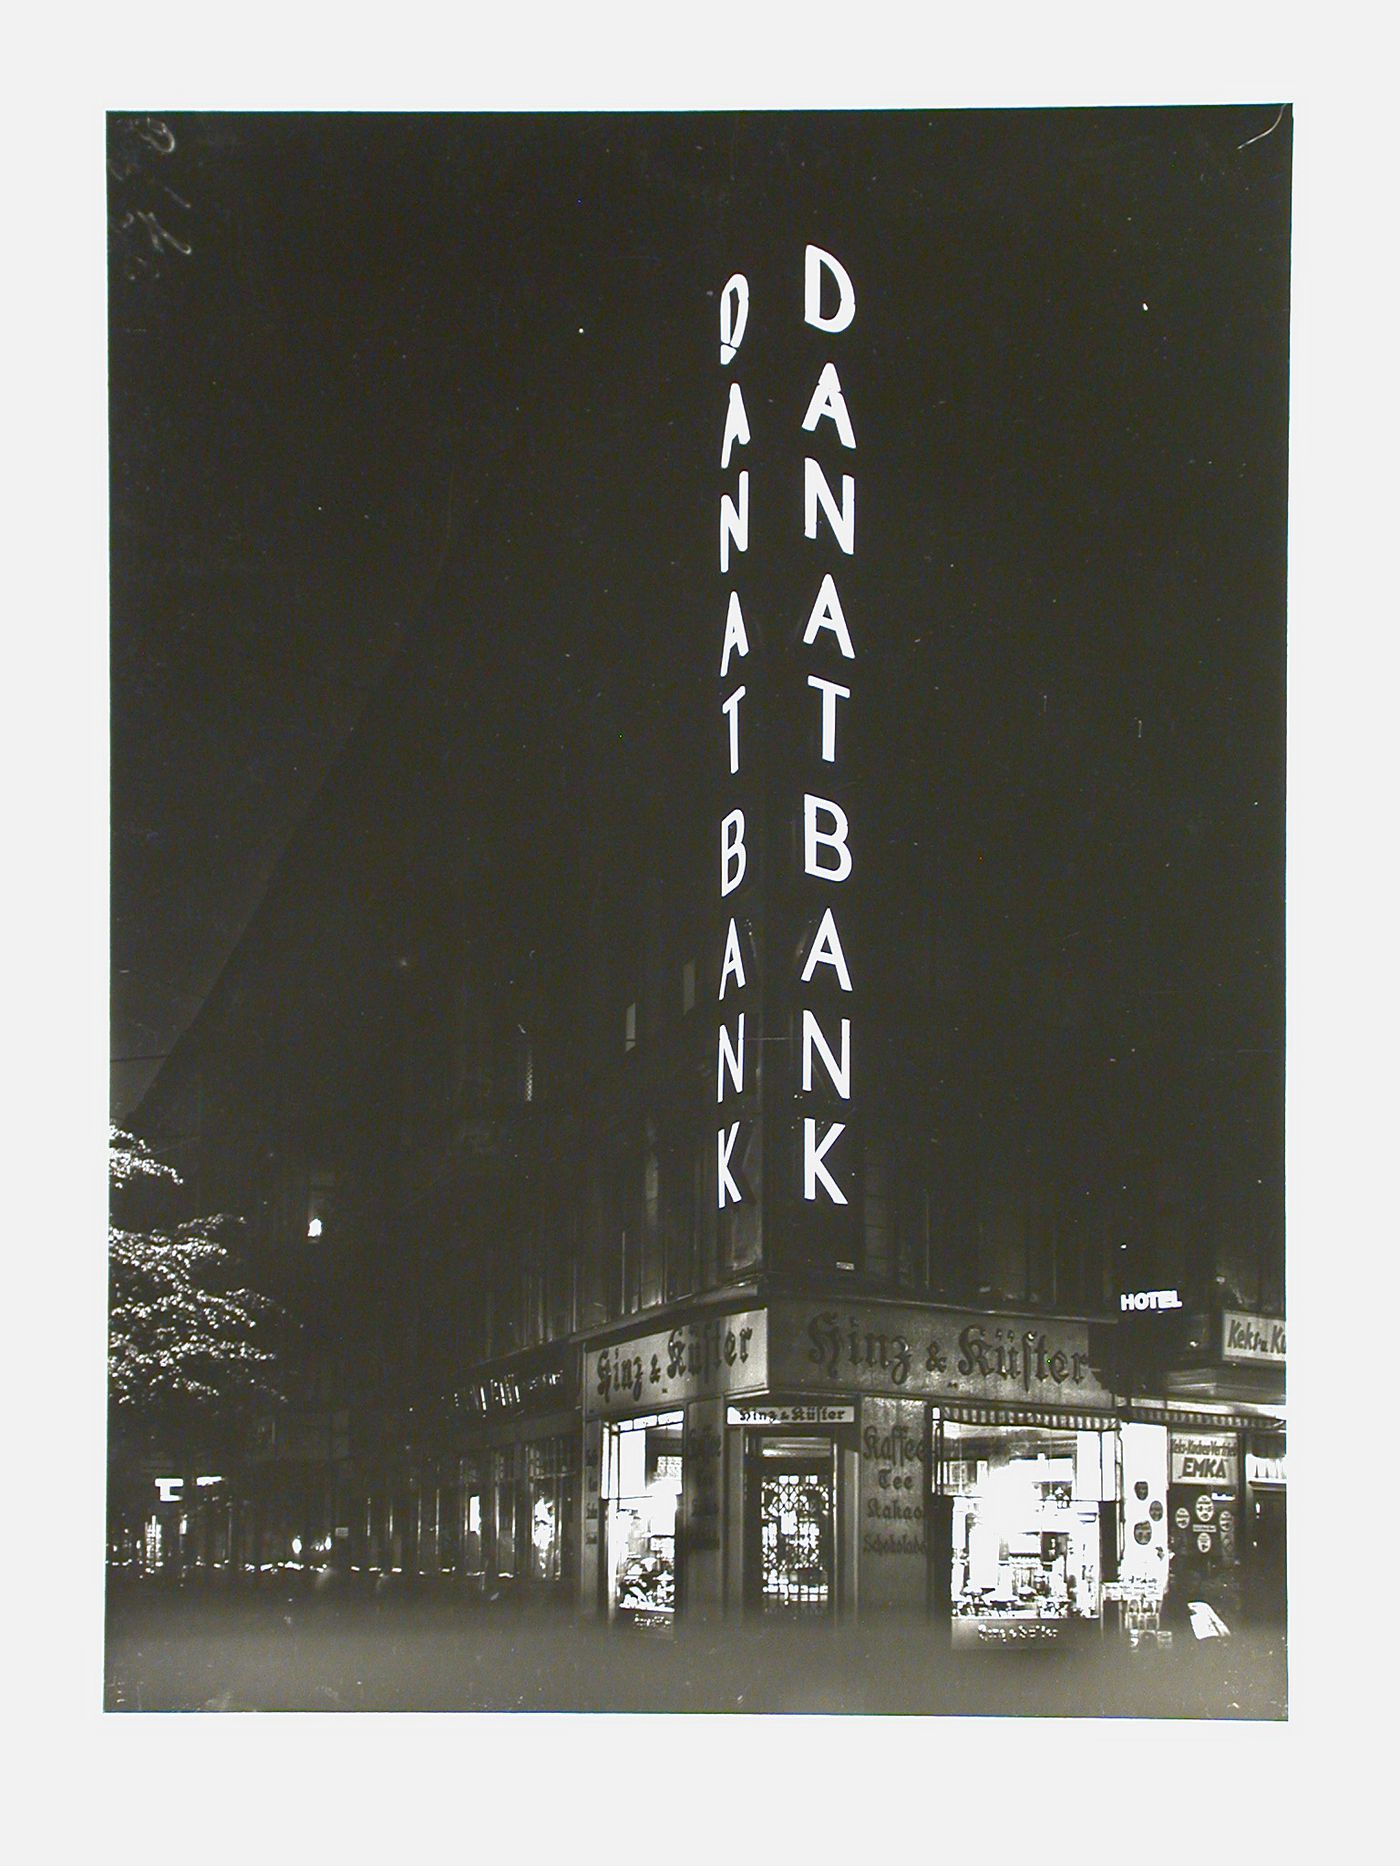 Illuminated night view of Danatbank sign, Germany